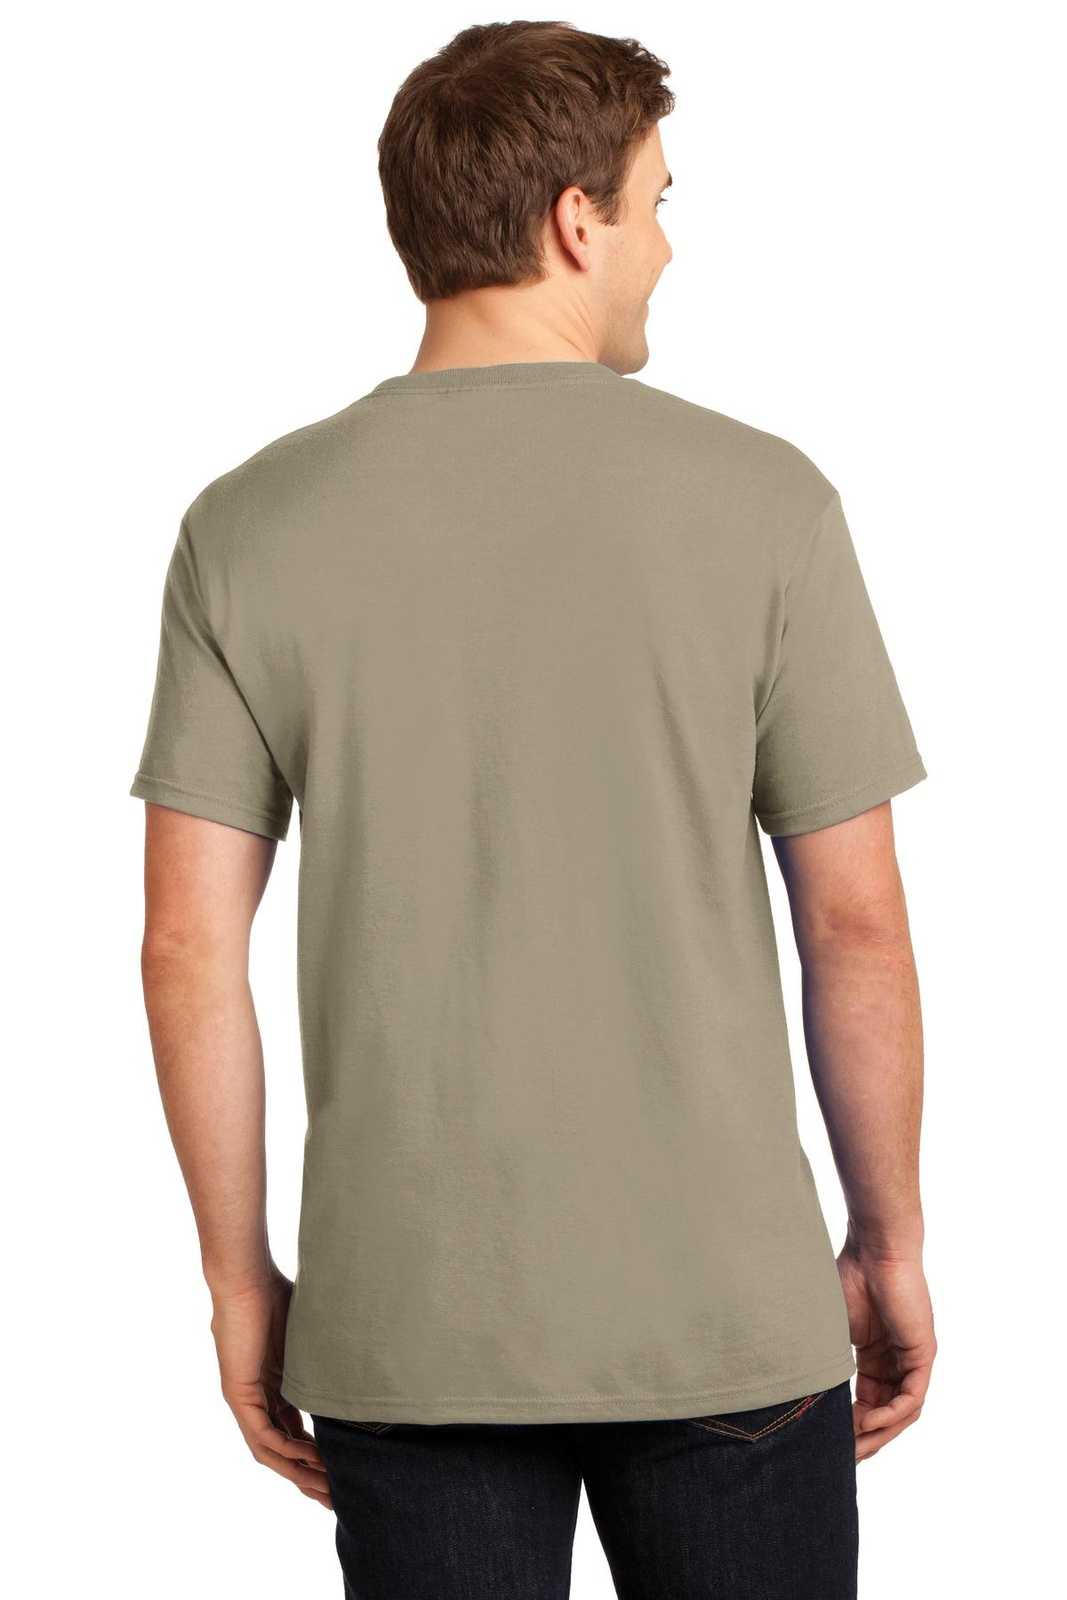 Jerzees 29MP Dri-Power 50/50 Cotton/Poly Pocket T-Shirt - Khaki - HIT a Double